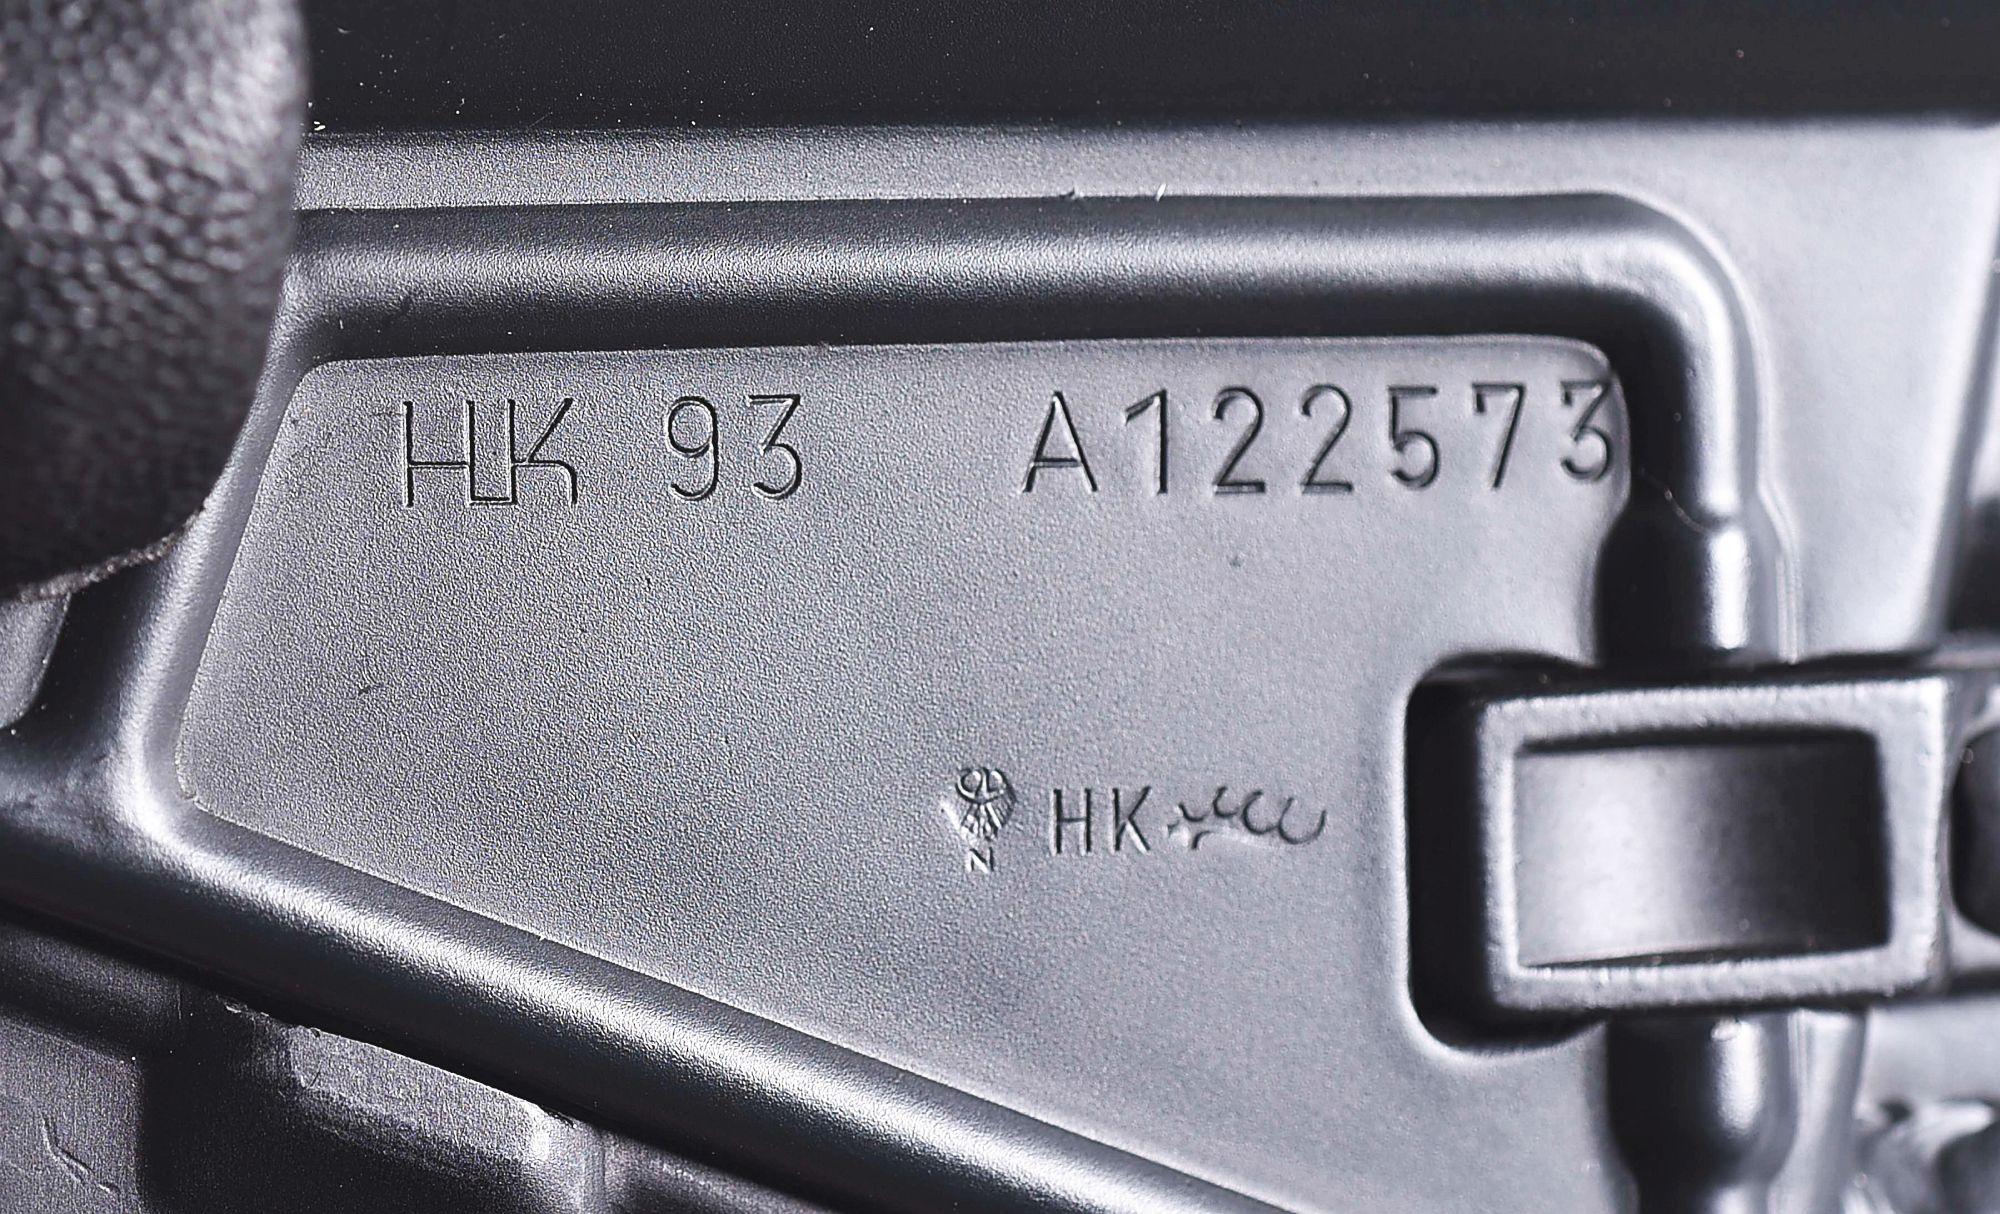 (M) PRE-BAN HECKLER & KOCH HK93 .223 SEMI-AUTOMATIC RIFLE.